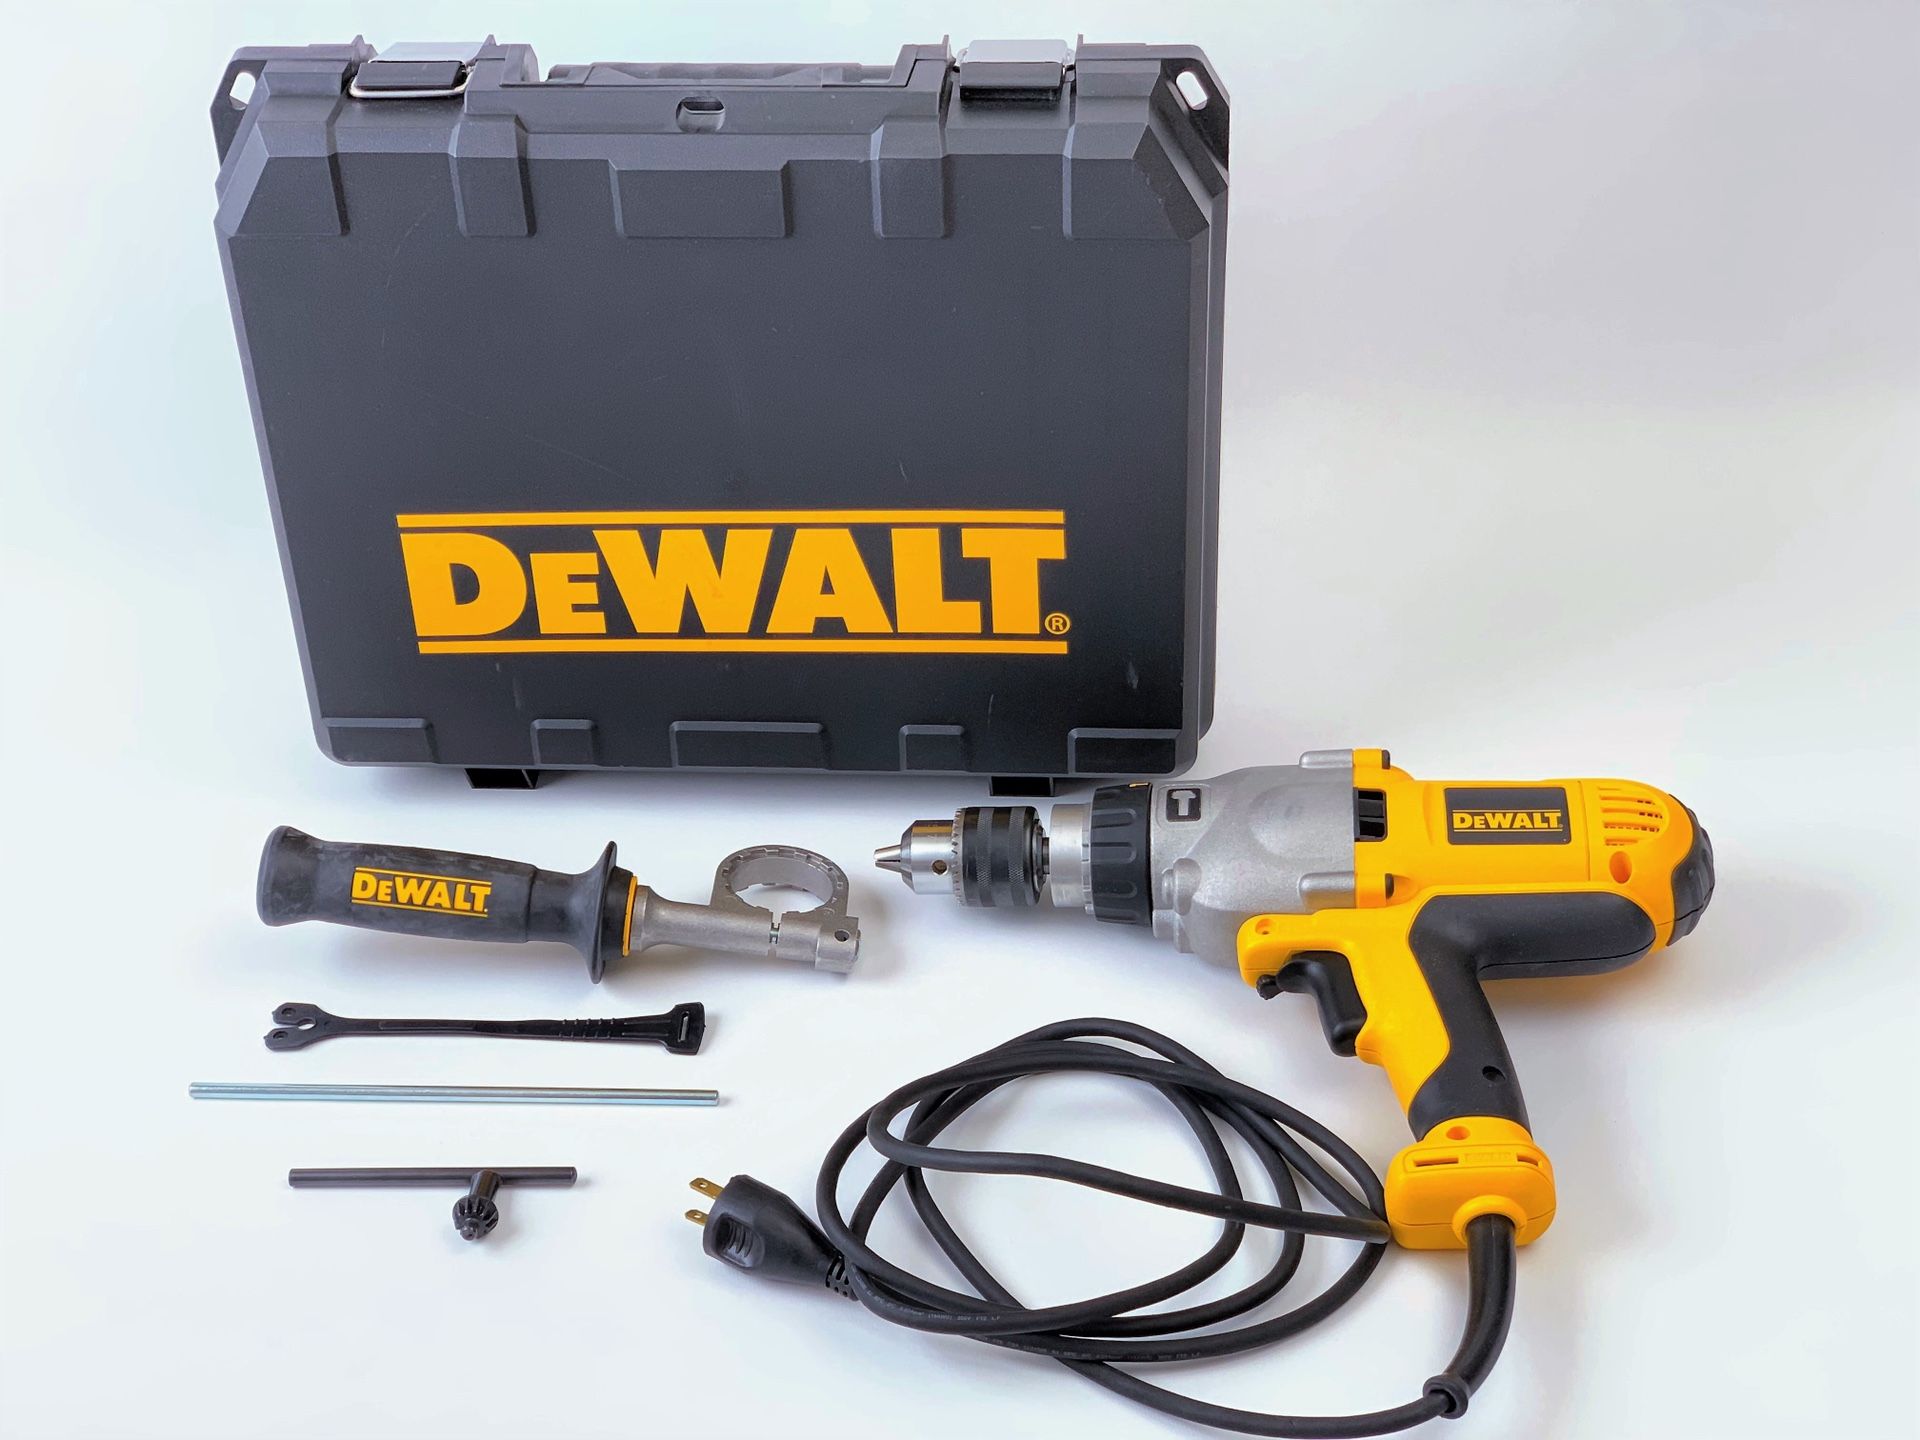 DEWALT Hammer Drill Kit, 1/2-Inch, 10-Amp, Mid-Handle Grip (DWD525K)